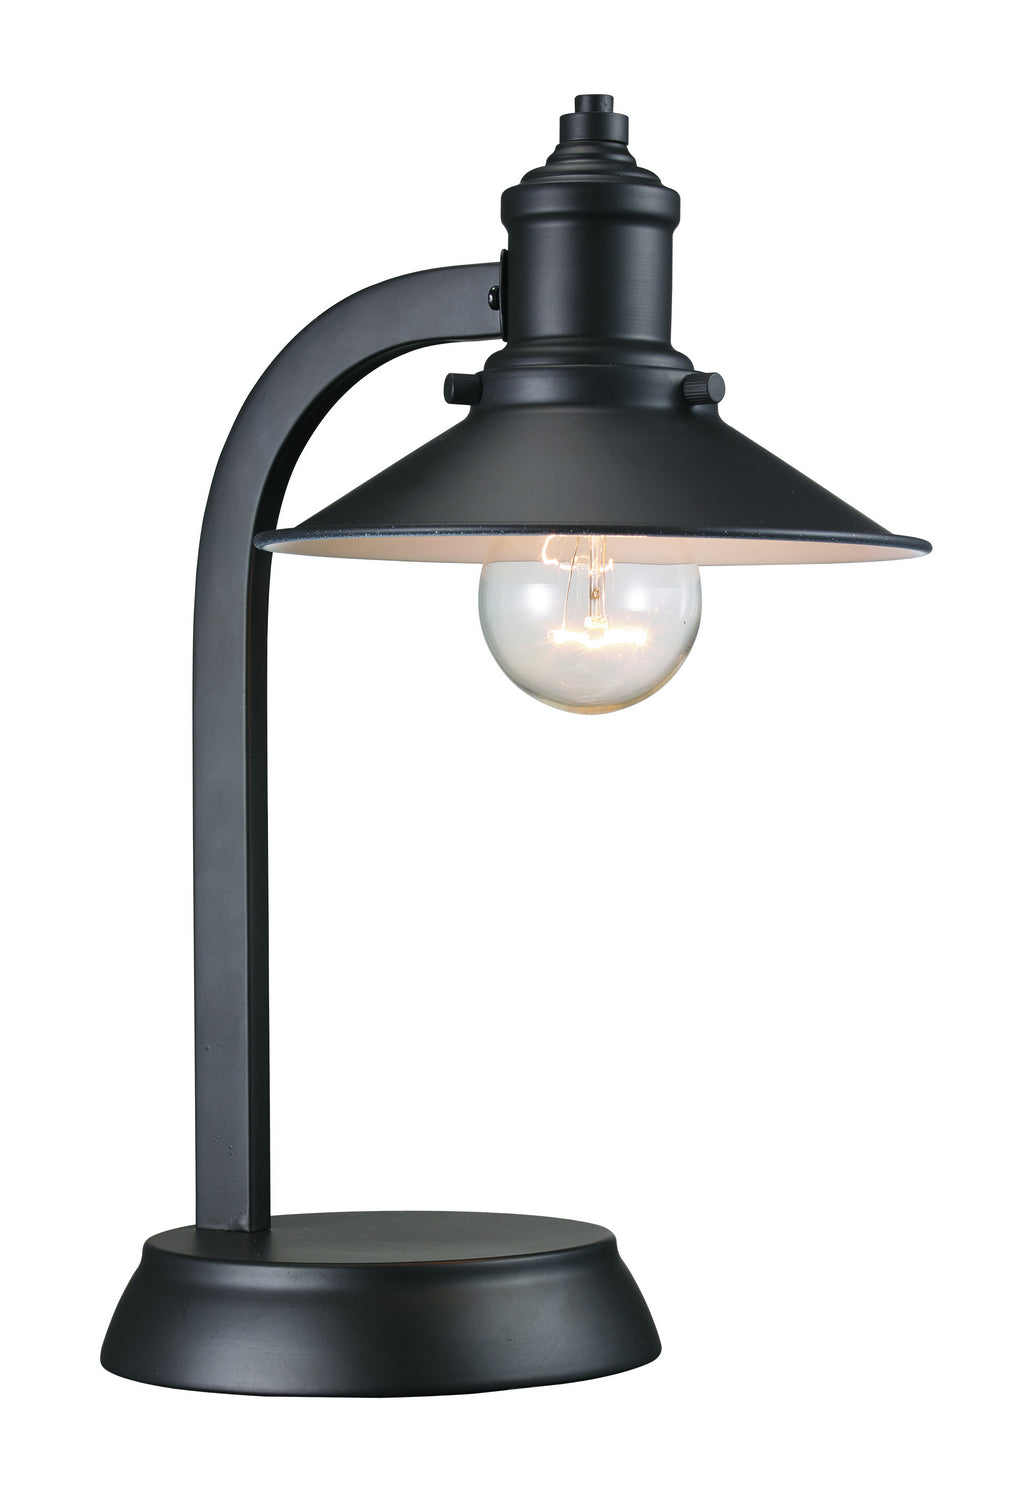 Trans Globe Imports RTL-8986 ROB Liberty One Light Table Lamp Lamp Bronze / Dark